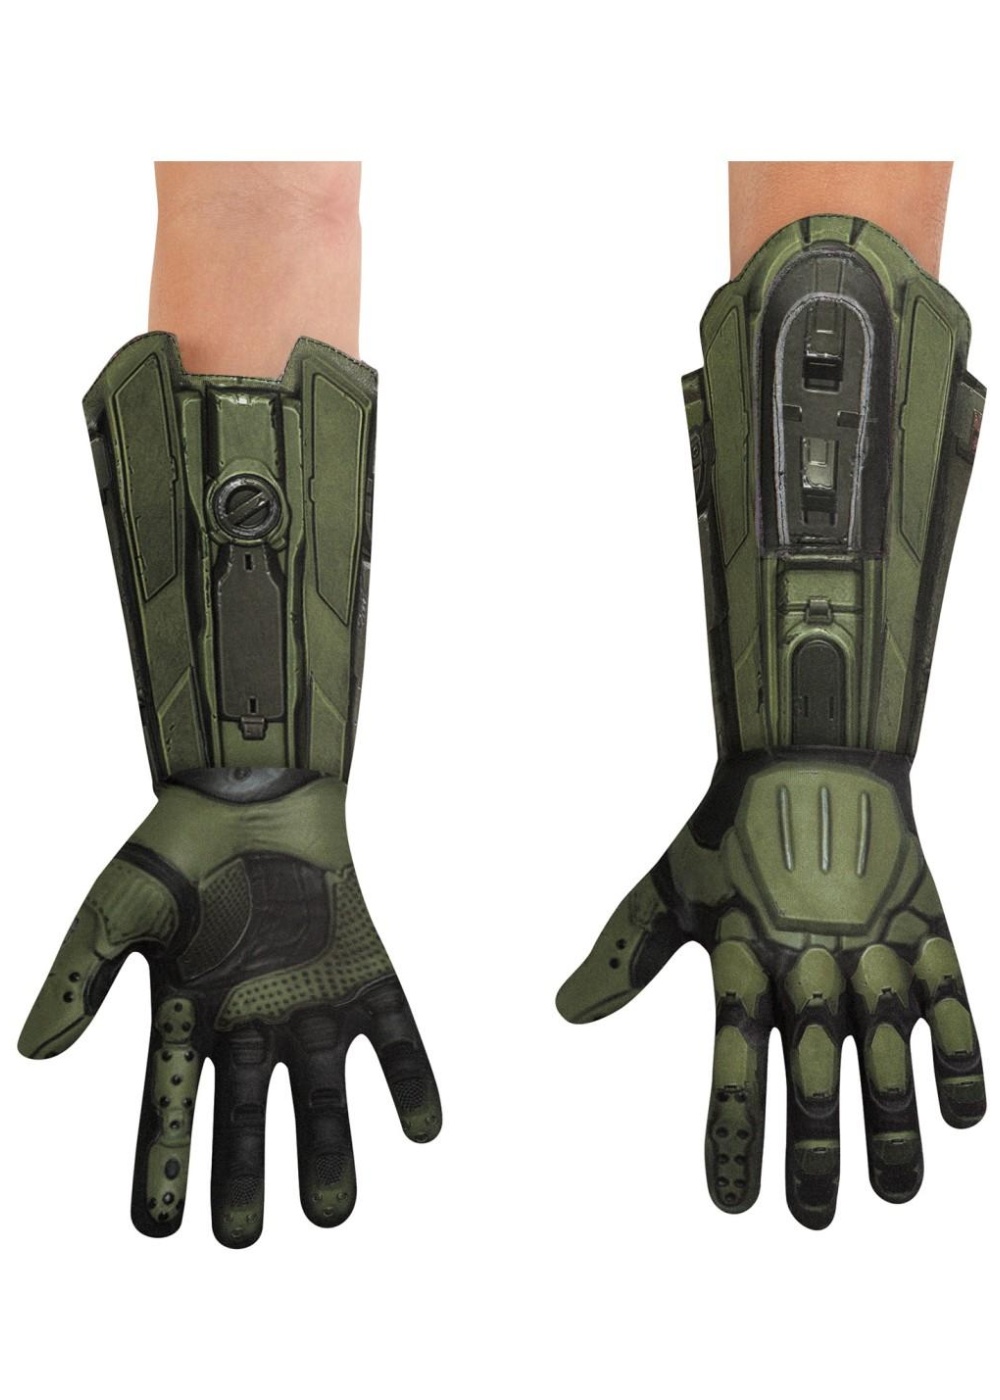  Boys Halo Master Chief Gloves